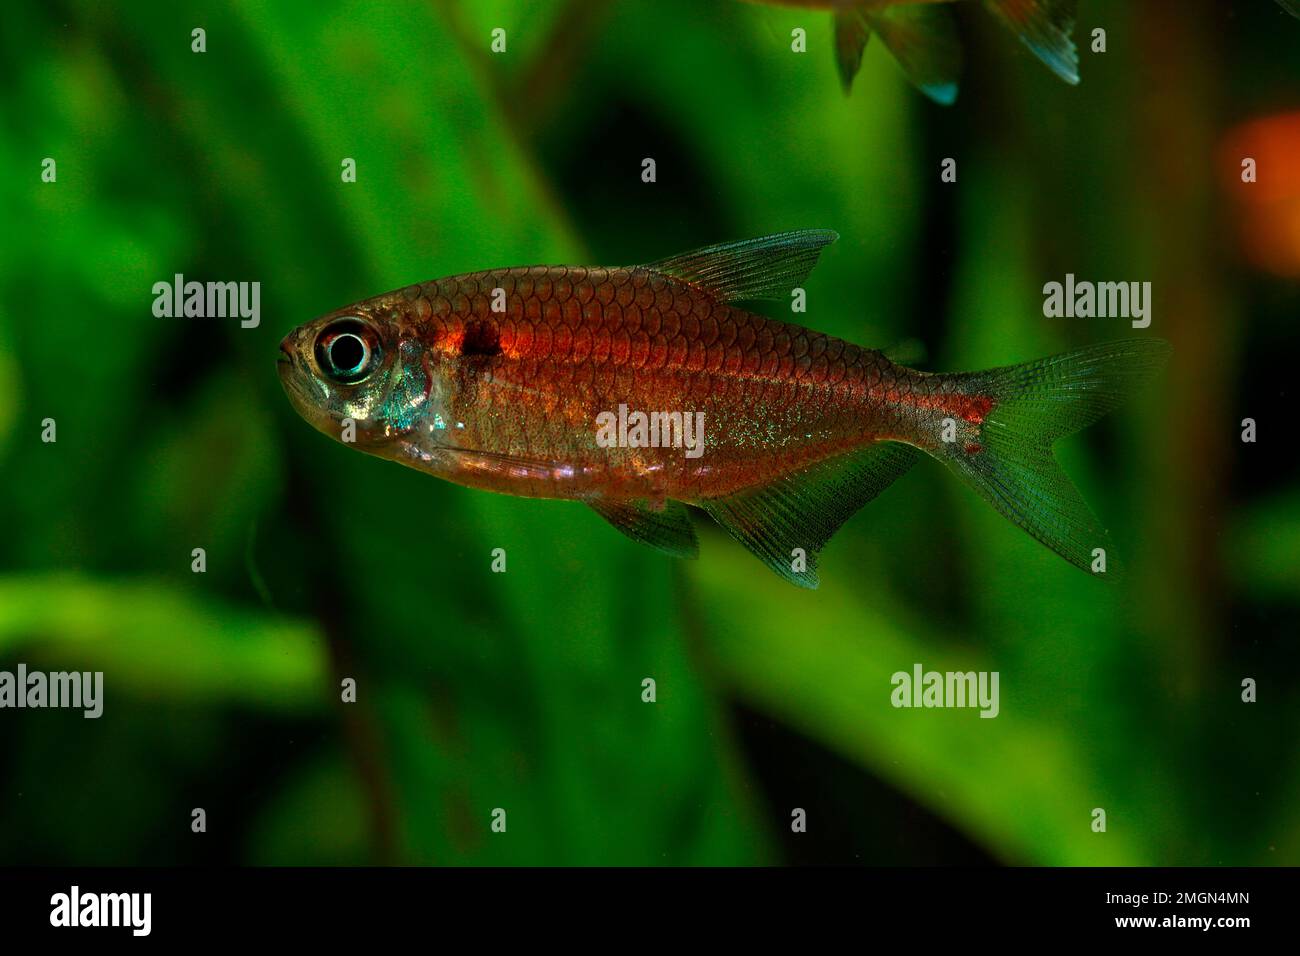 Tetra laser rouge (Hemigrammus coeruleus) mâle dans l'aquarium Photo Stock  - Alamy